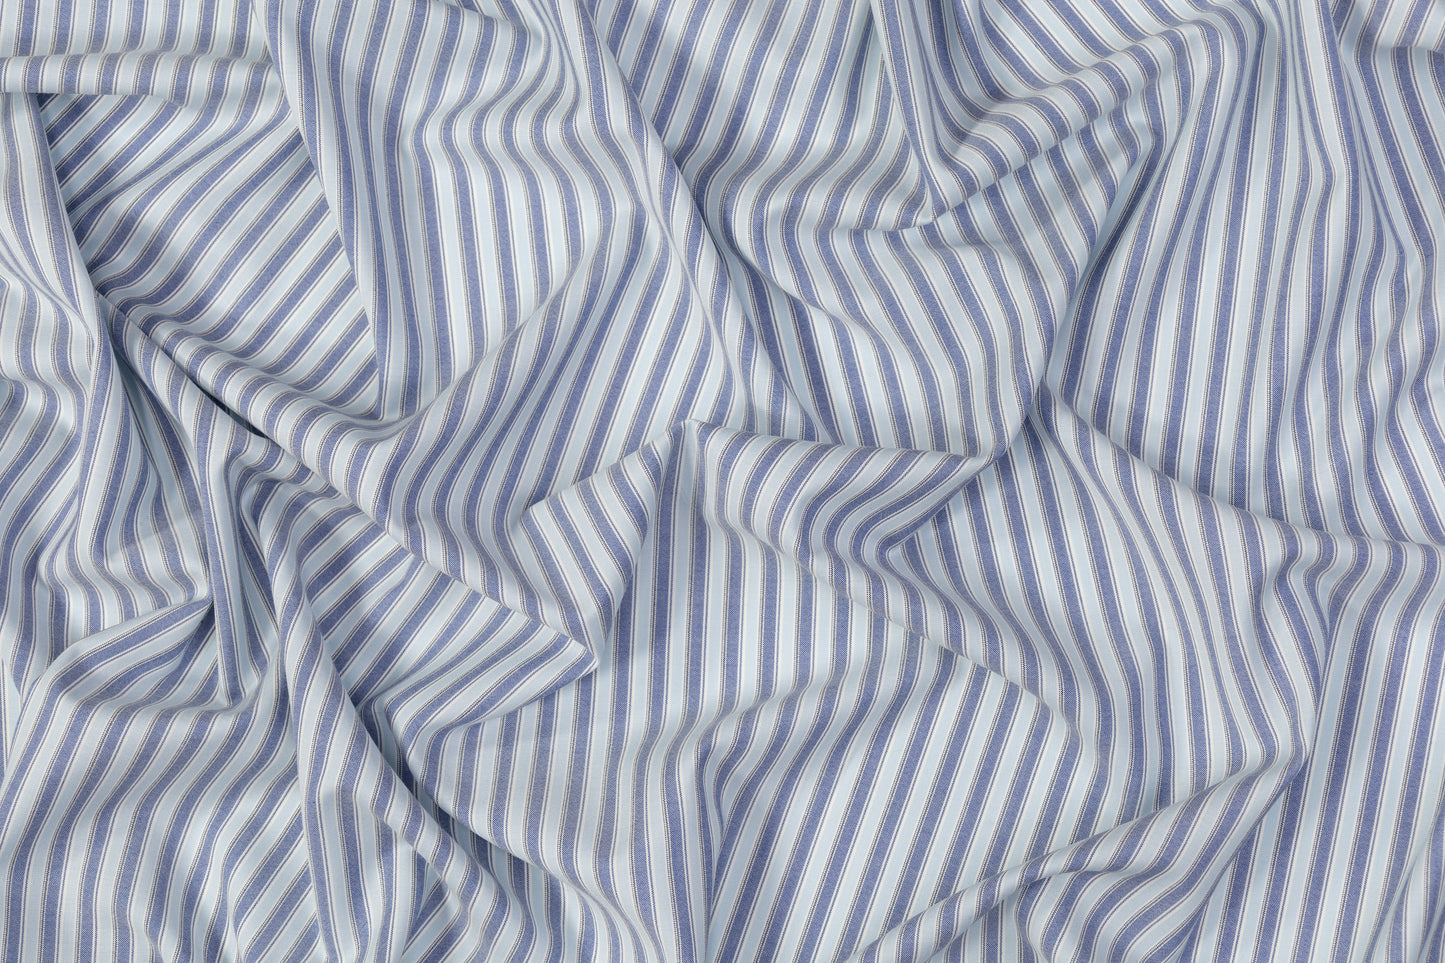 Striped Italian Wool Suiting - Blue